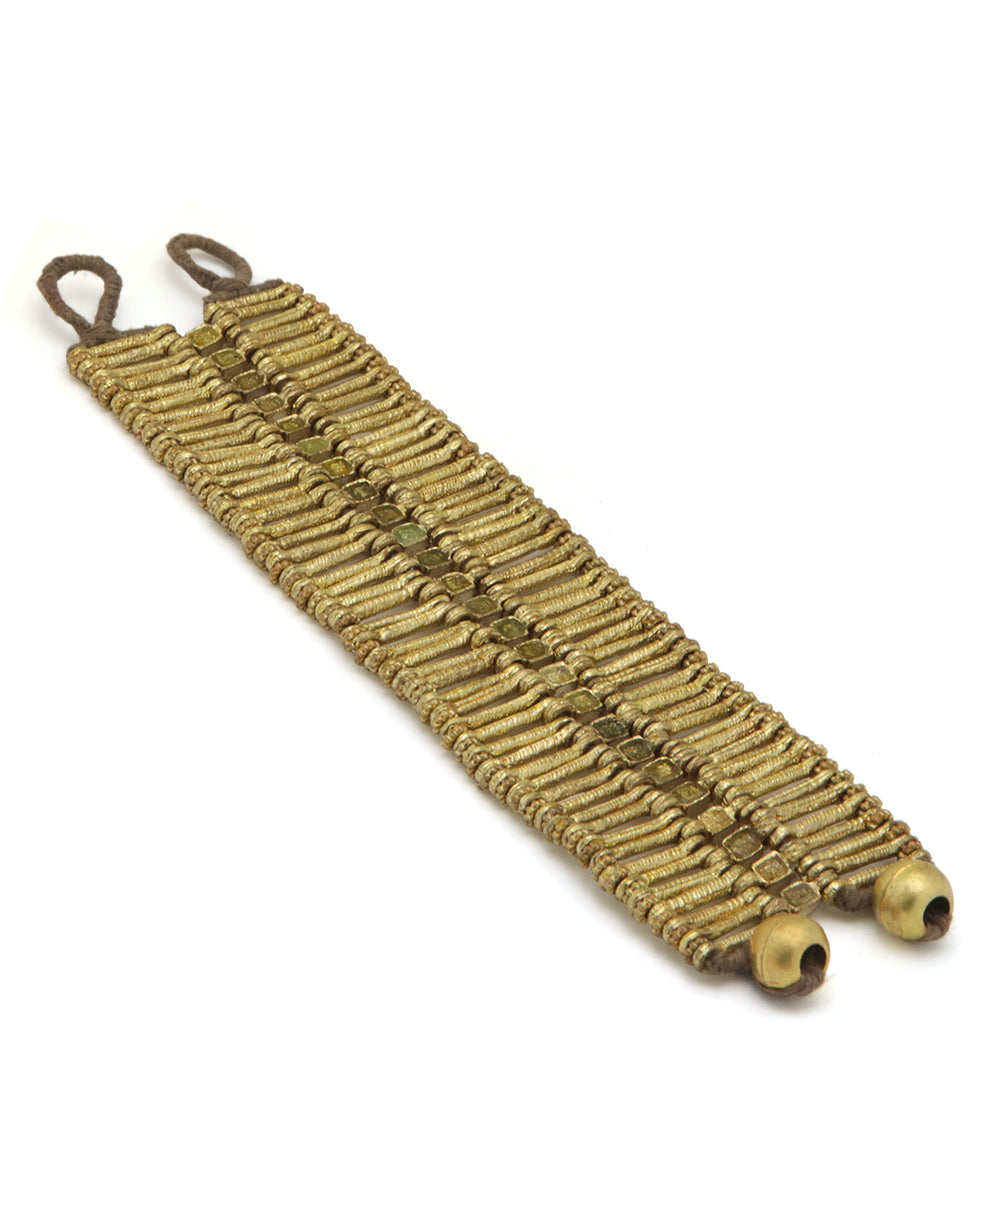 Gold colored bracelets, India